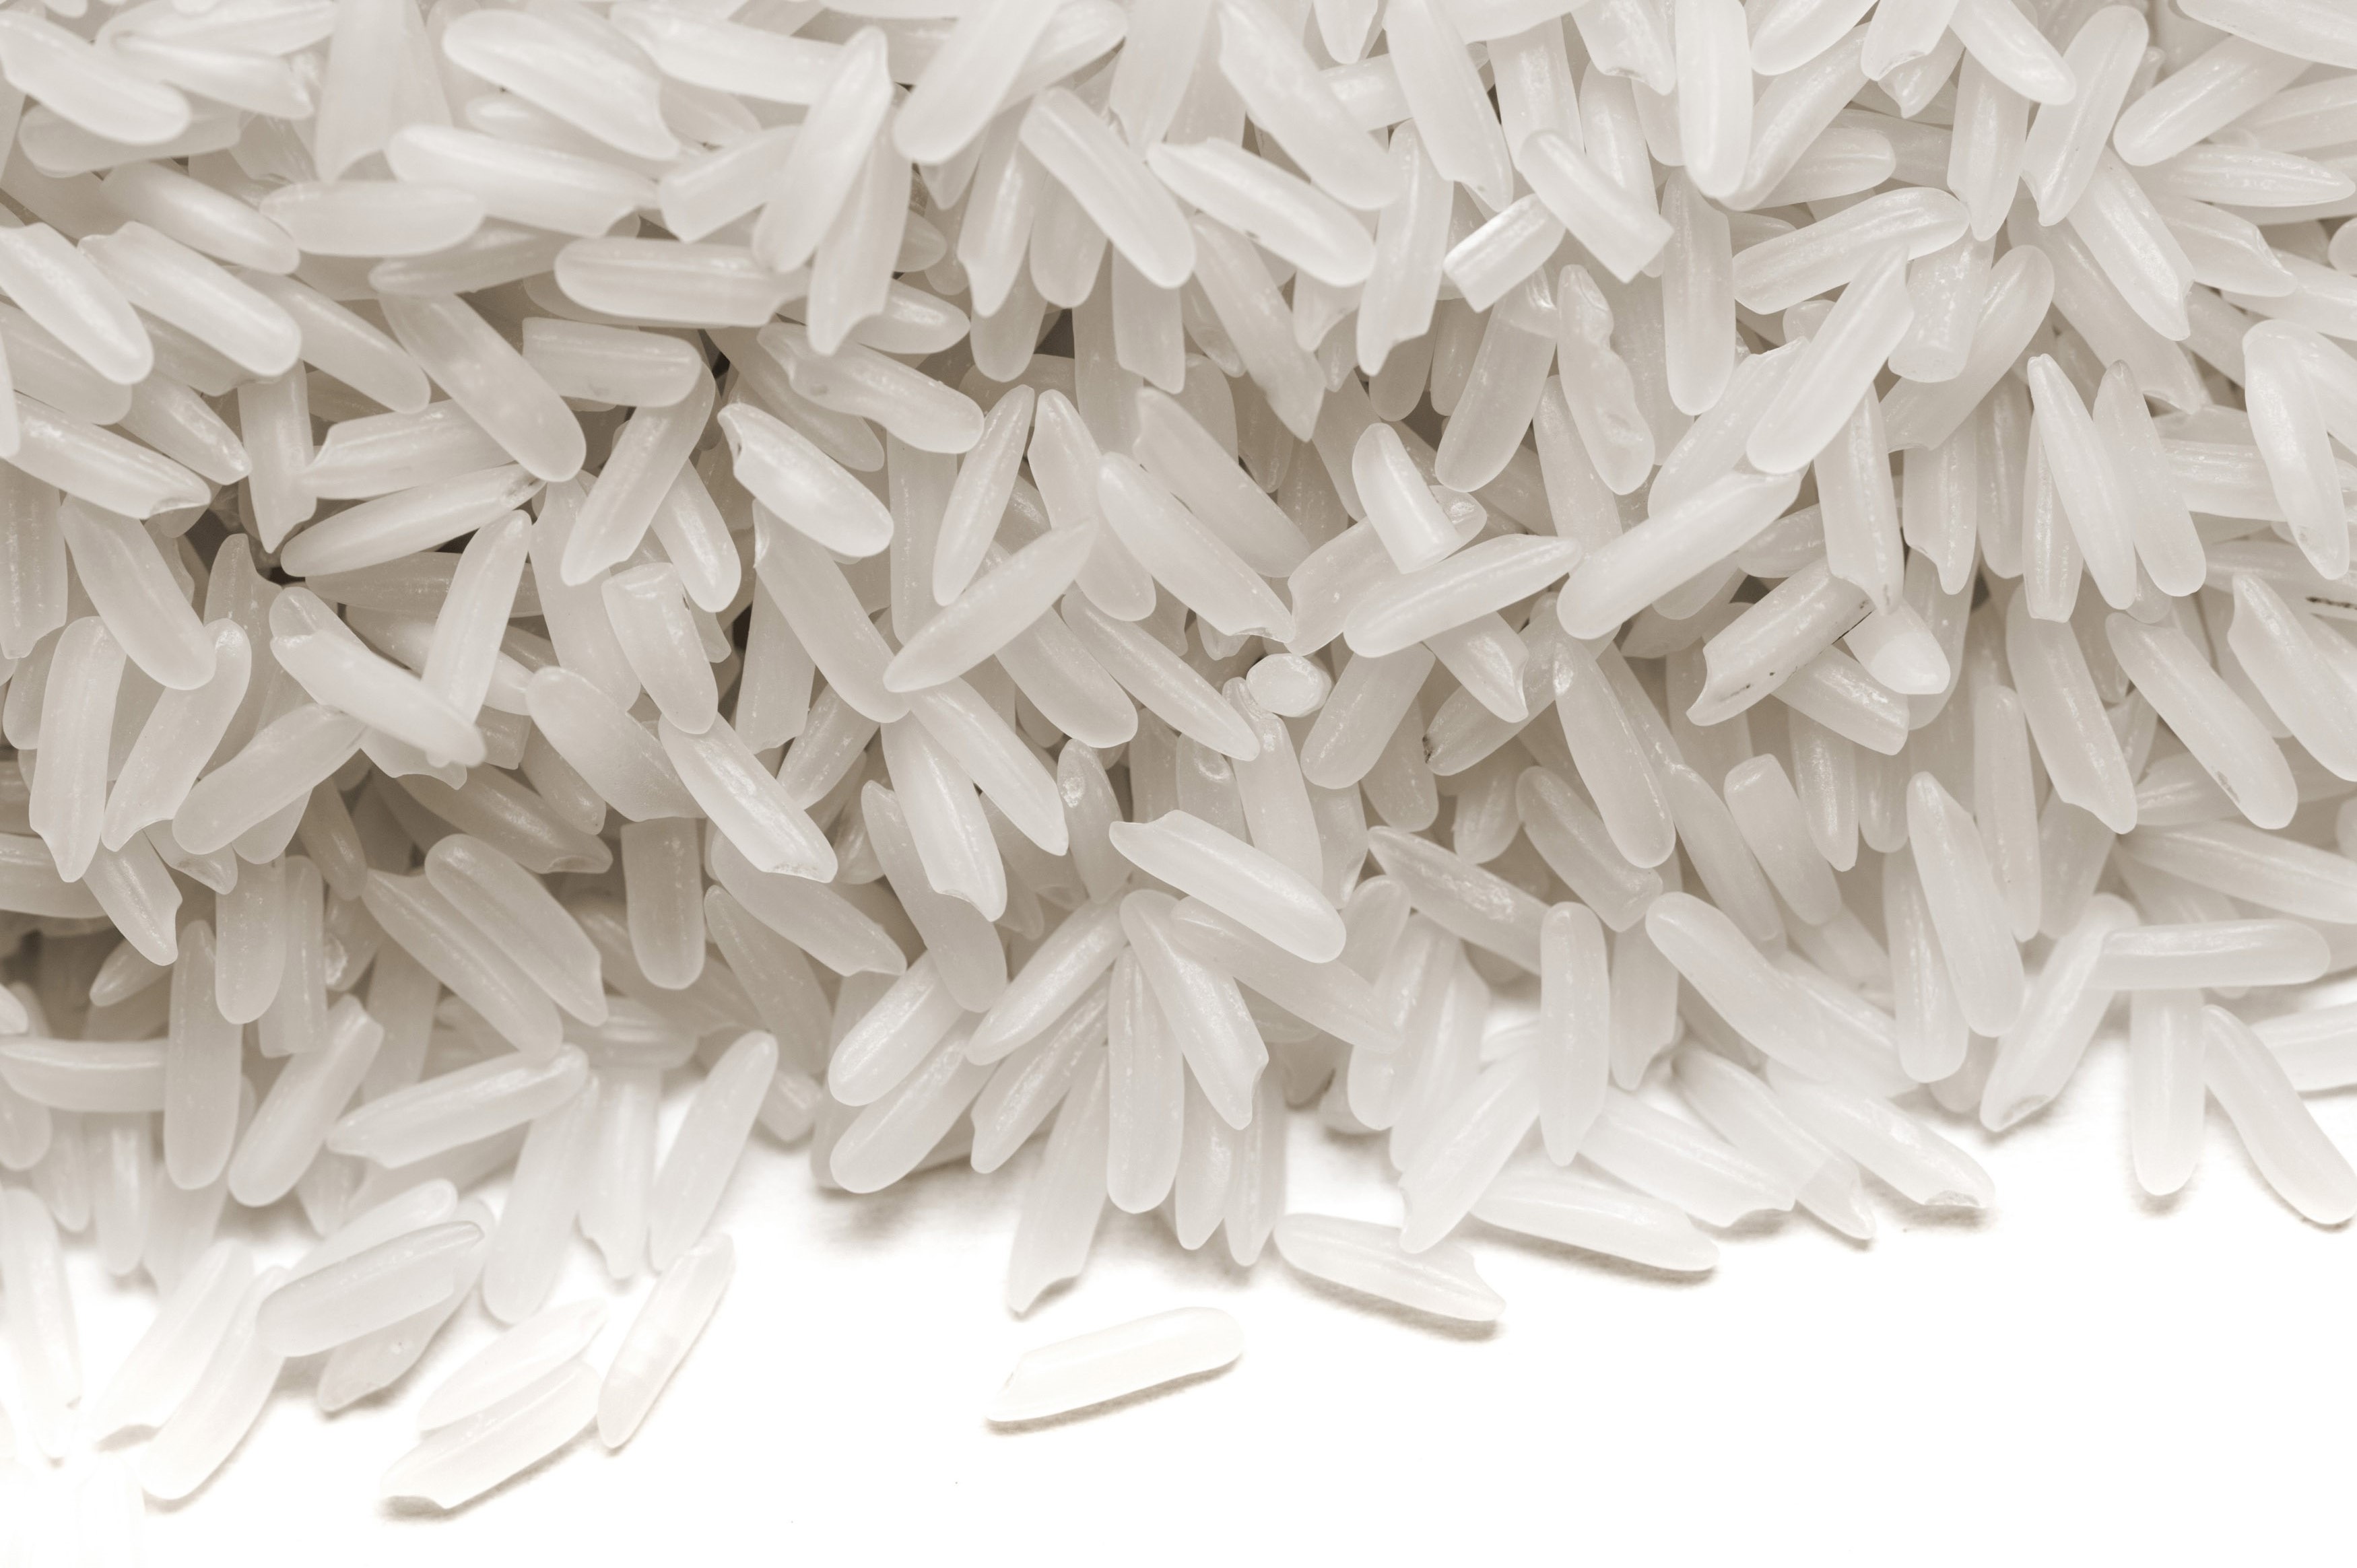 Long-grain white rice - Free Stock Image